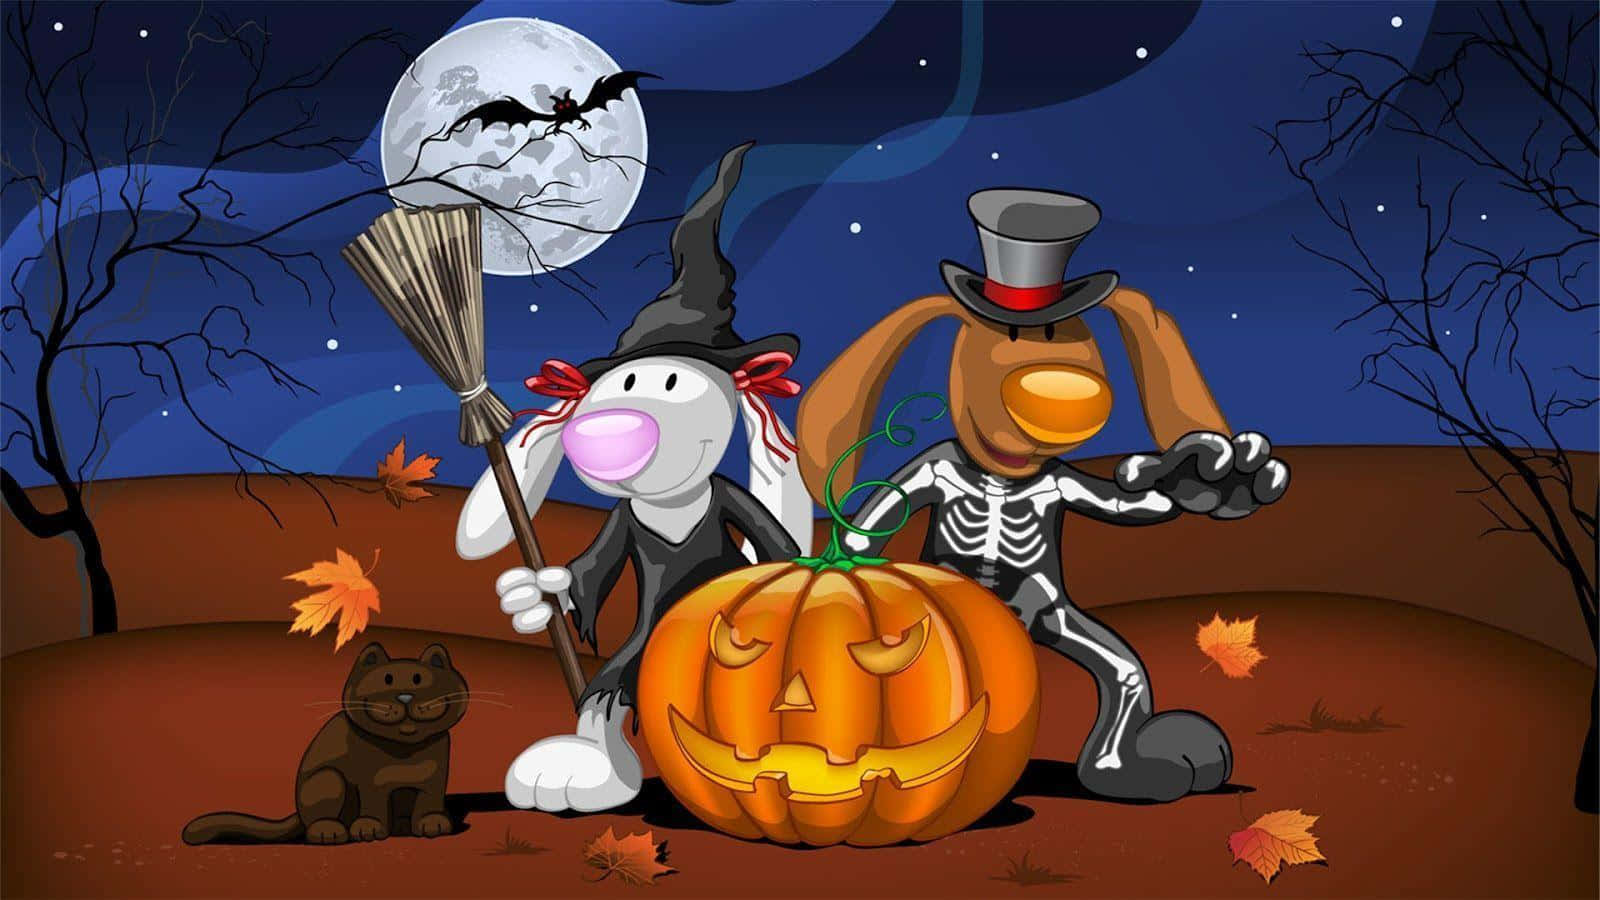 "Have a Spooktacular Halloween!" Wallpaper